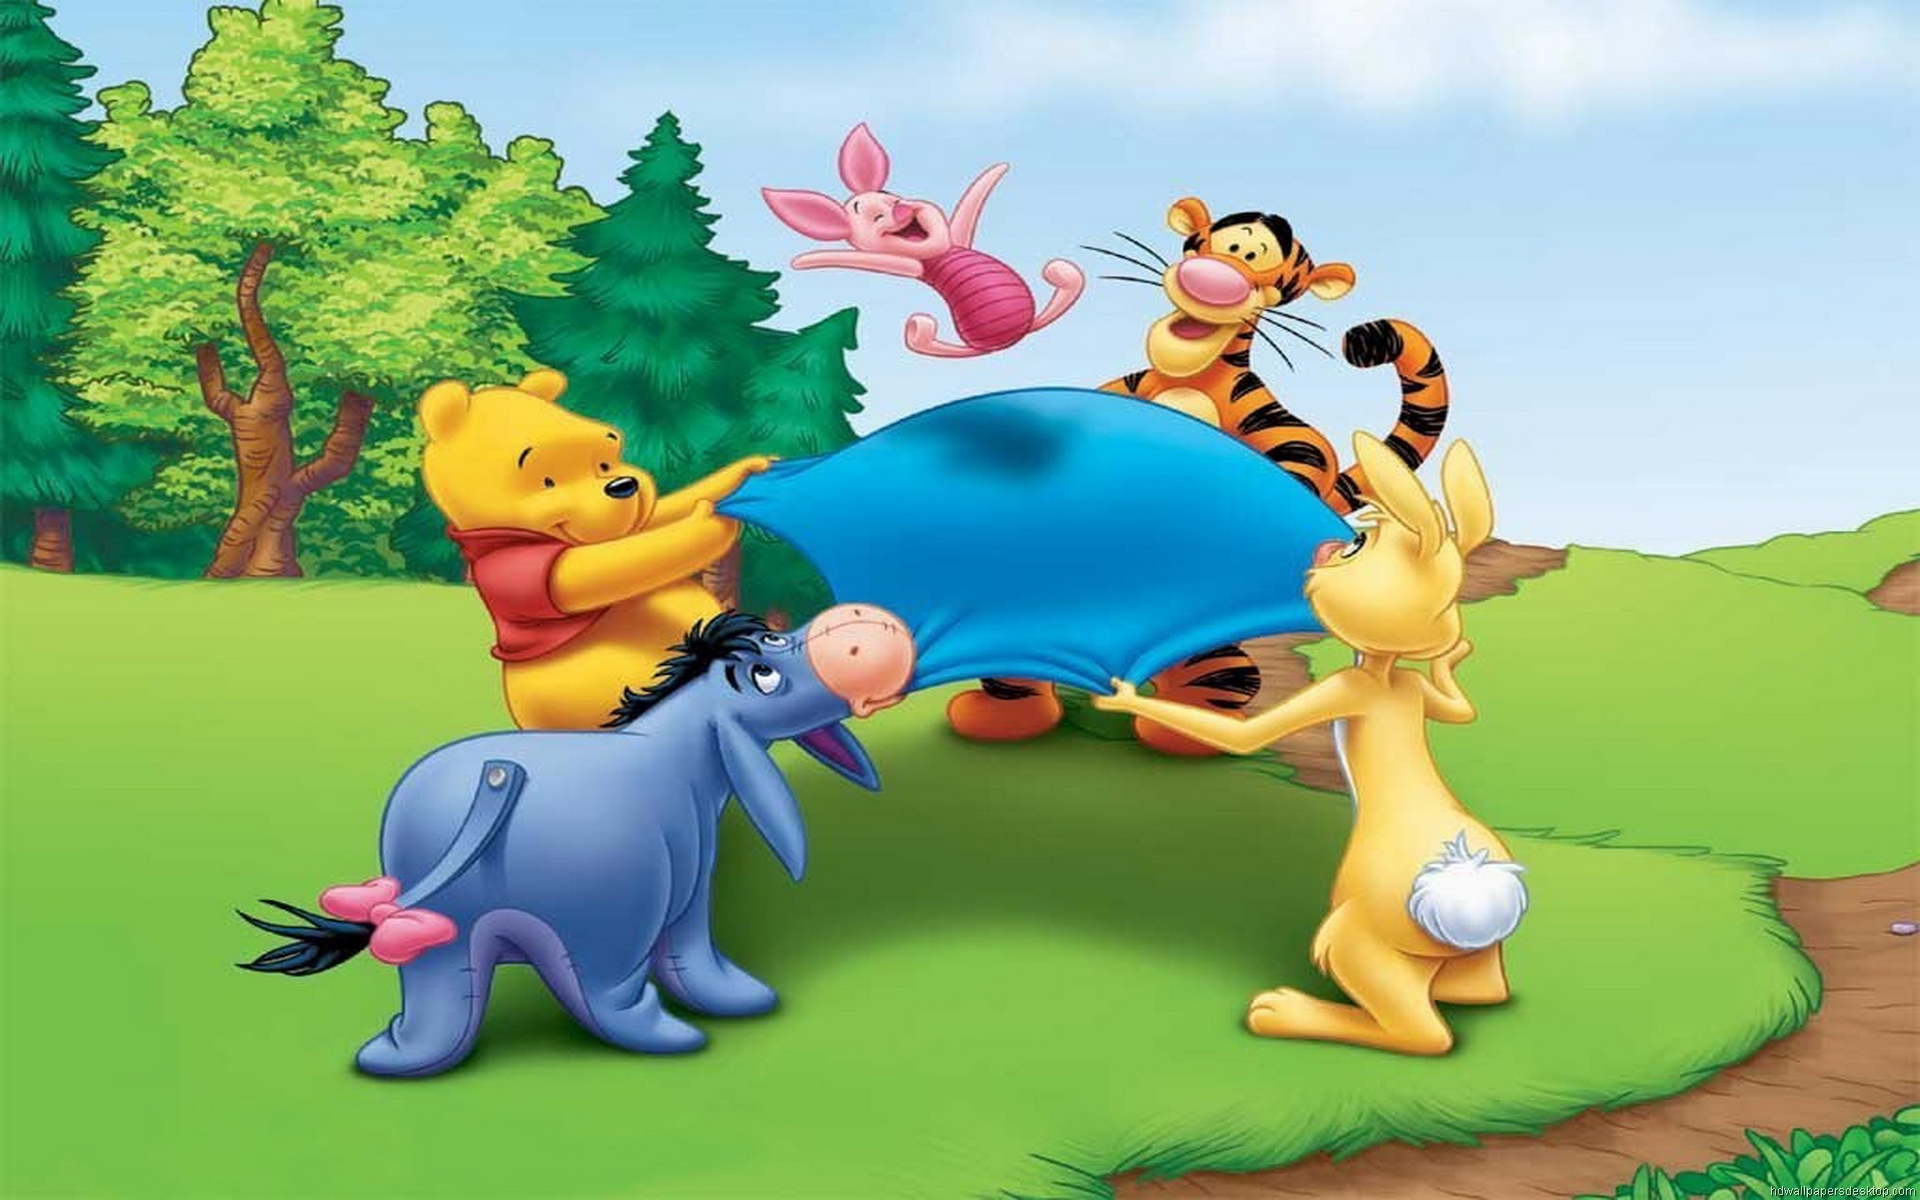 Winnie the pooh. Винни-пух. Дружба мультяшки. Мультфильмы о дружбе. Мультики для малышей.